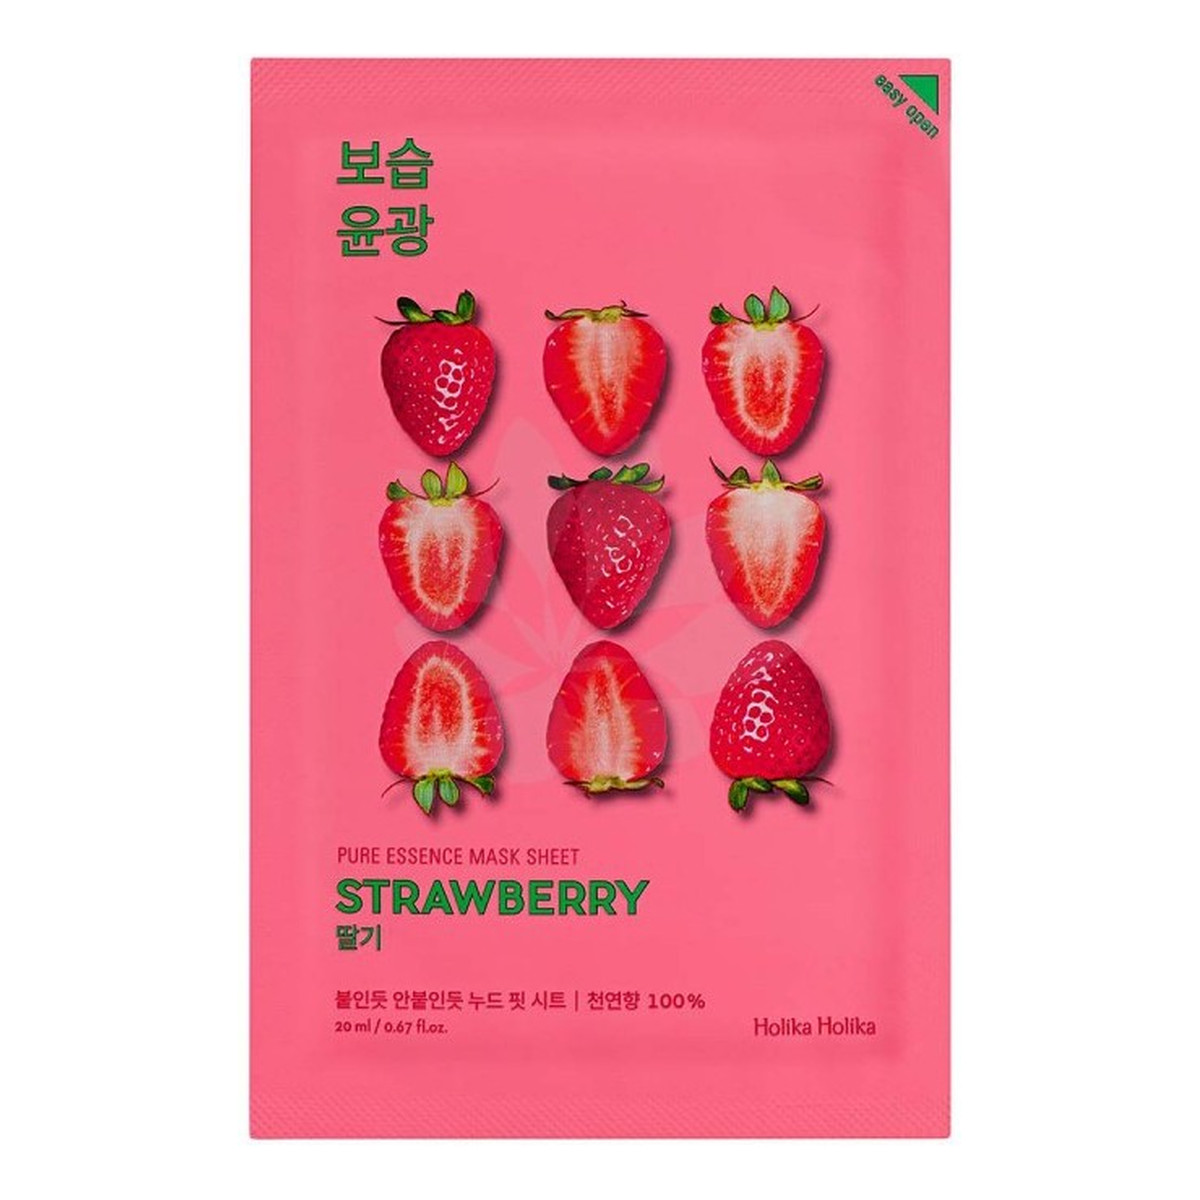 Holika Holika Pure Essence Mask Sheet Strawberry Maseczka do twarzy z ekstraktem z truskawek 20ml